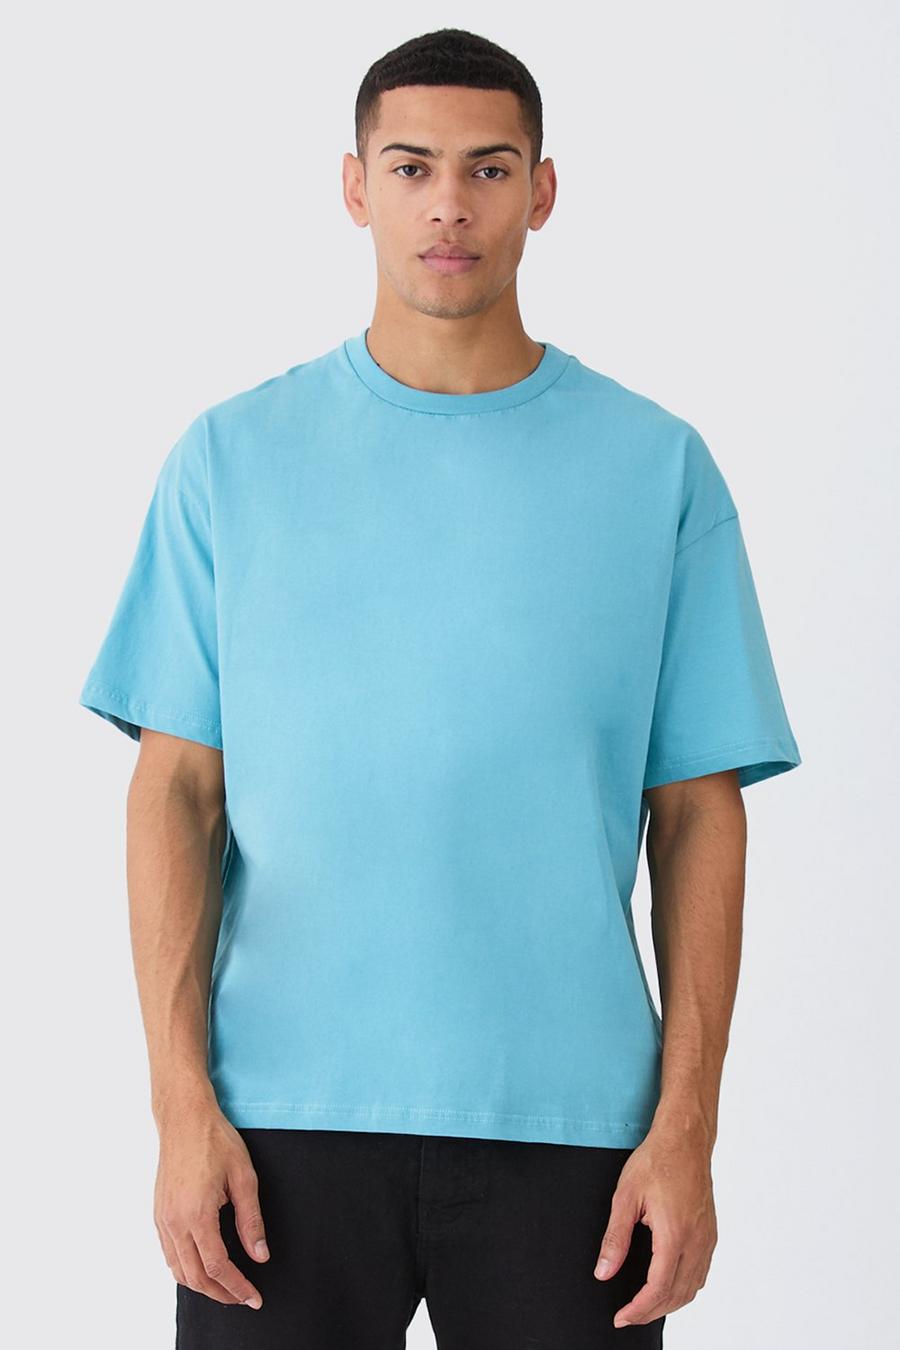 Aqua blue Oversized Crew Neck T-shirt